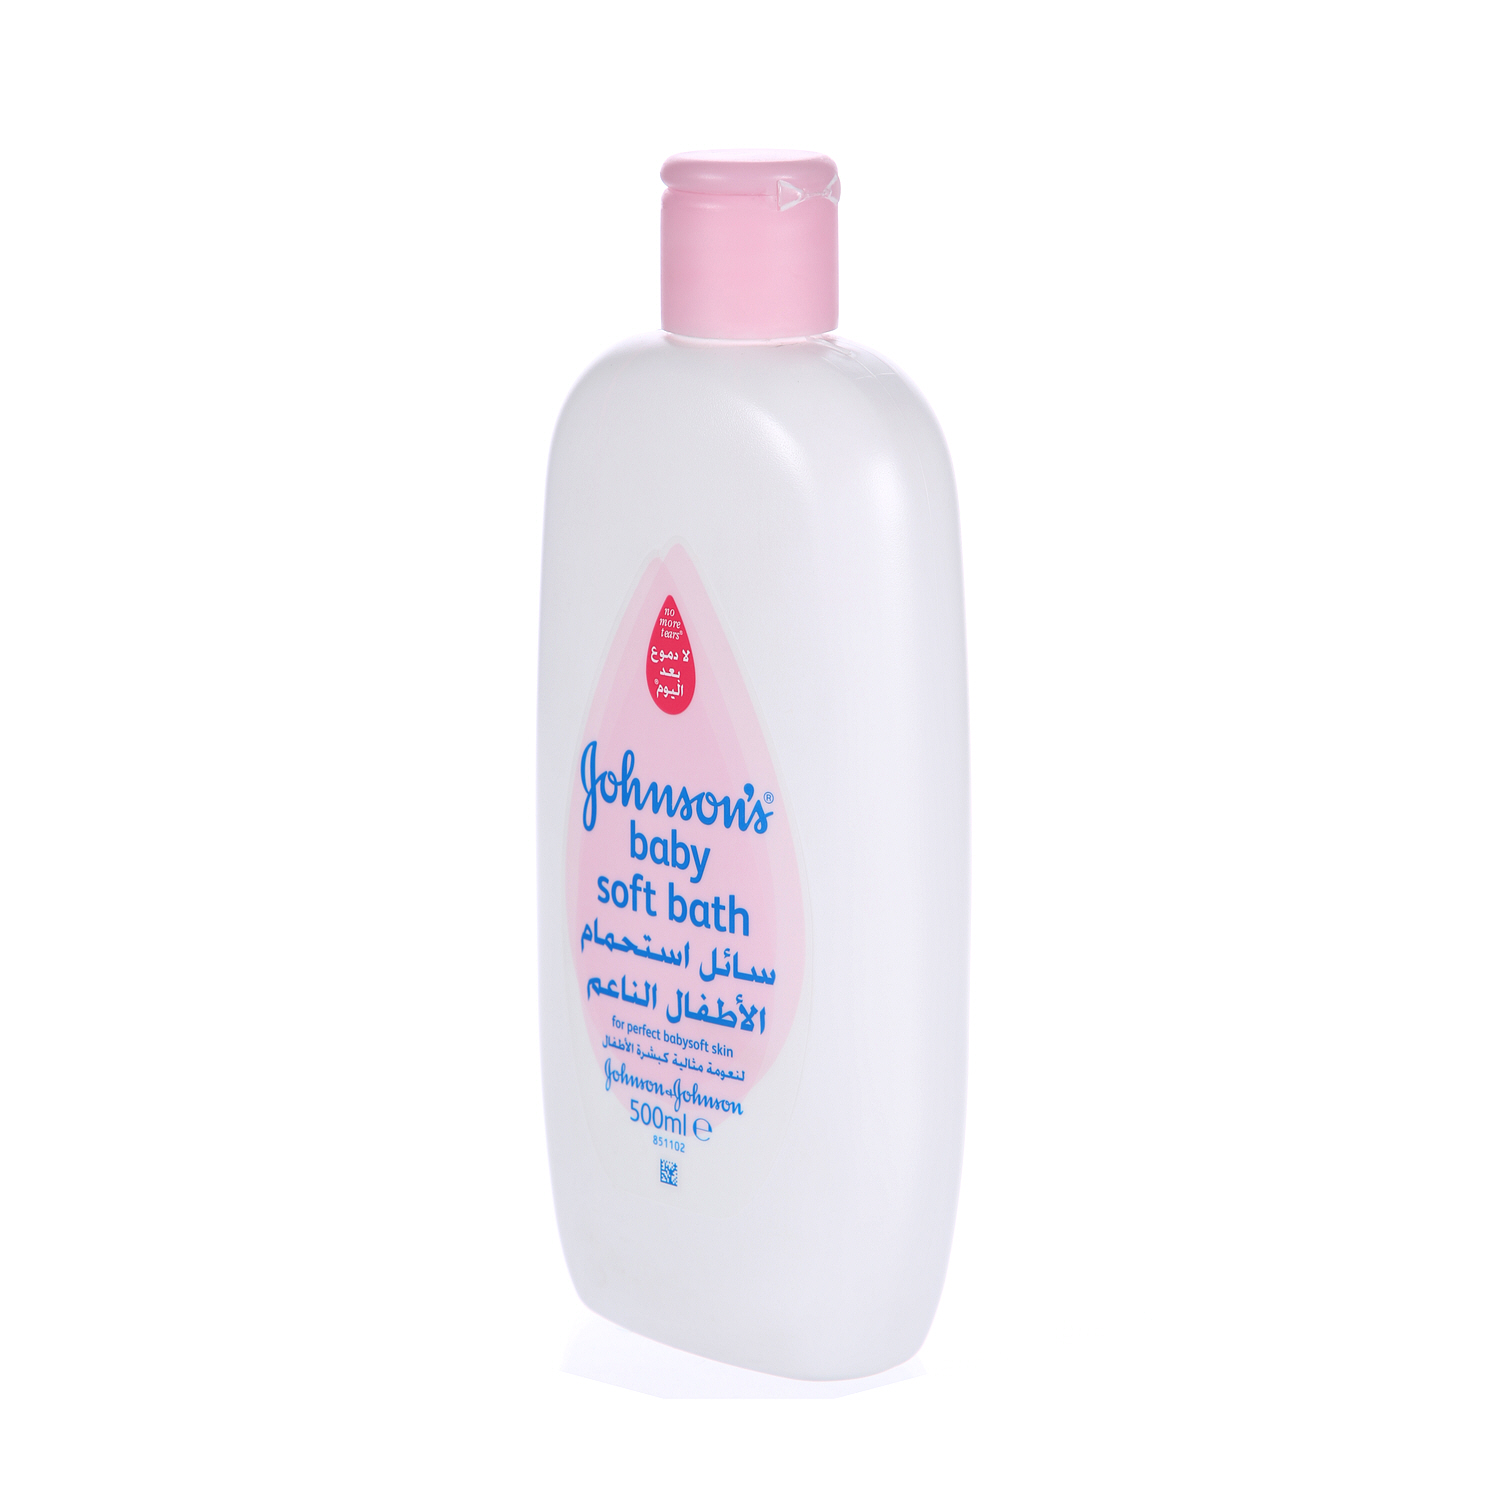 Johnson & Johnson Baby Soft Bath Pink 500ml